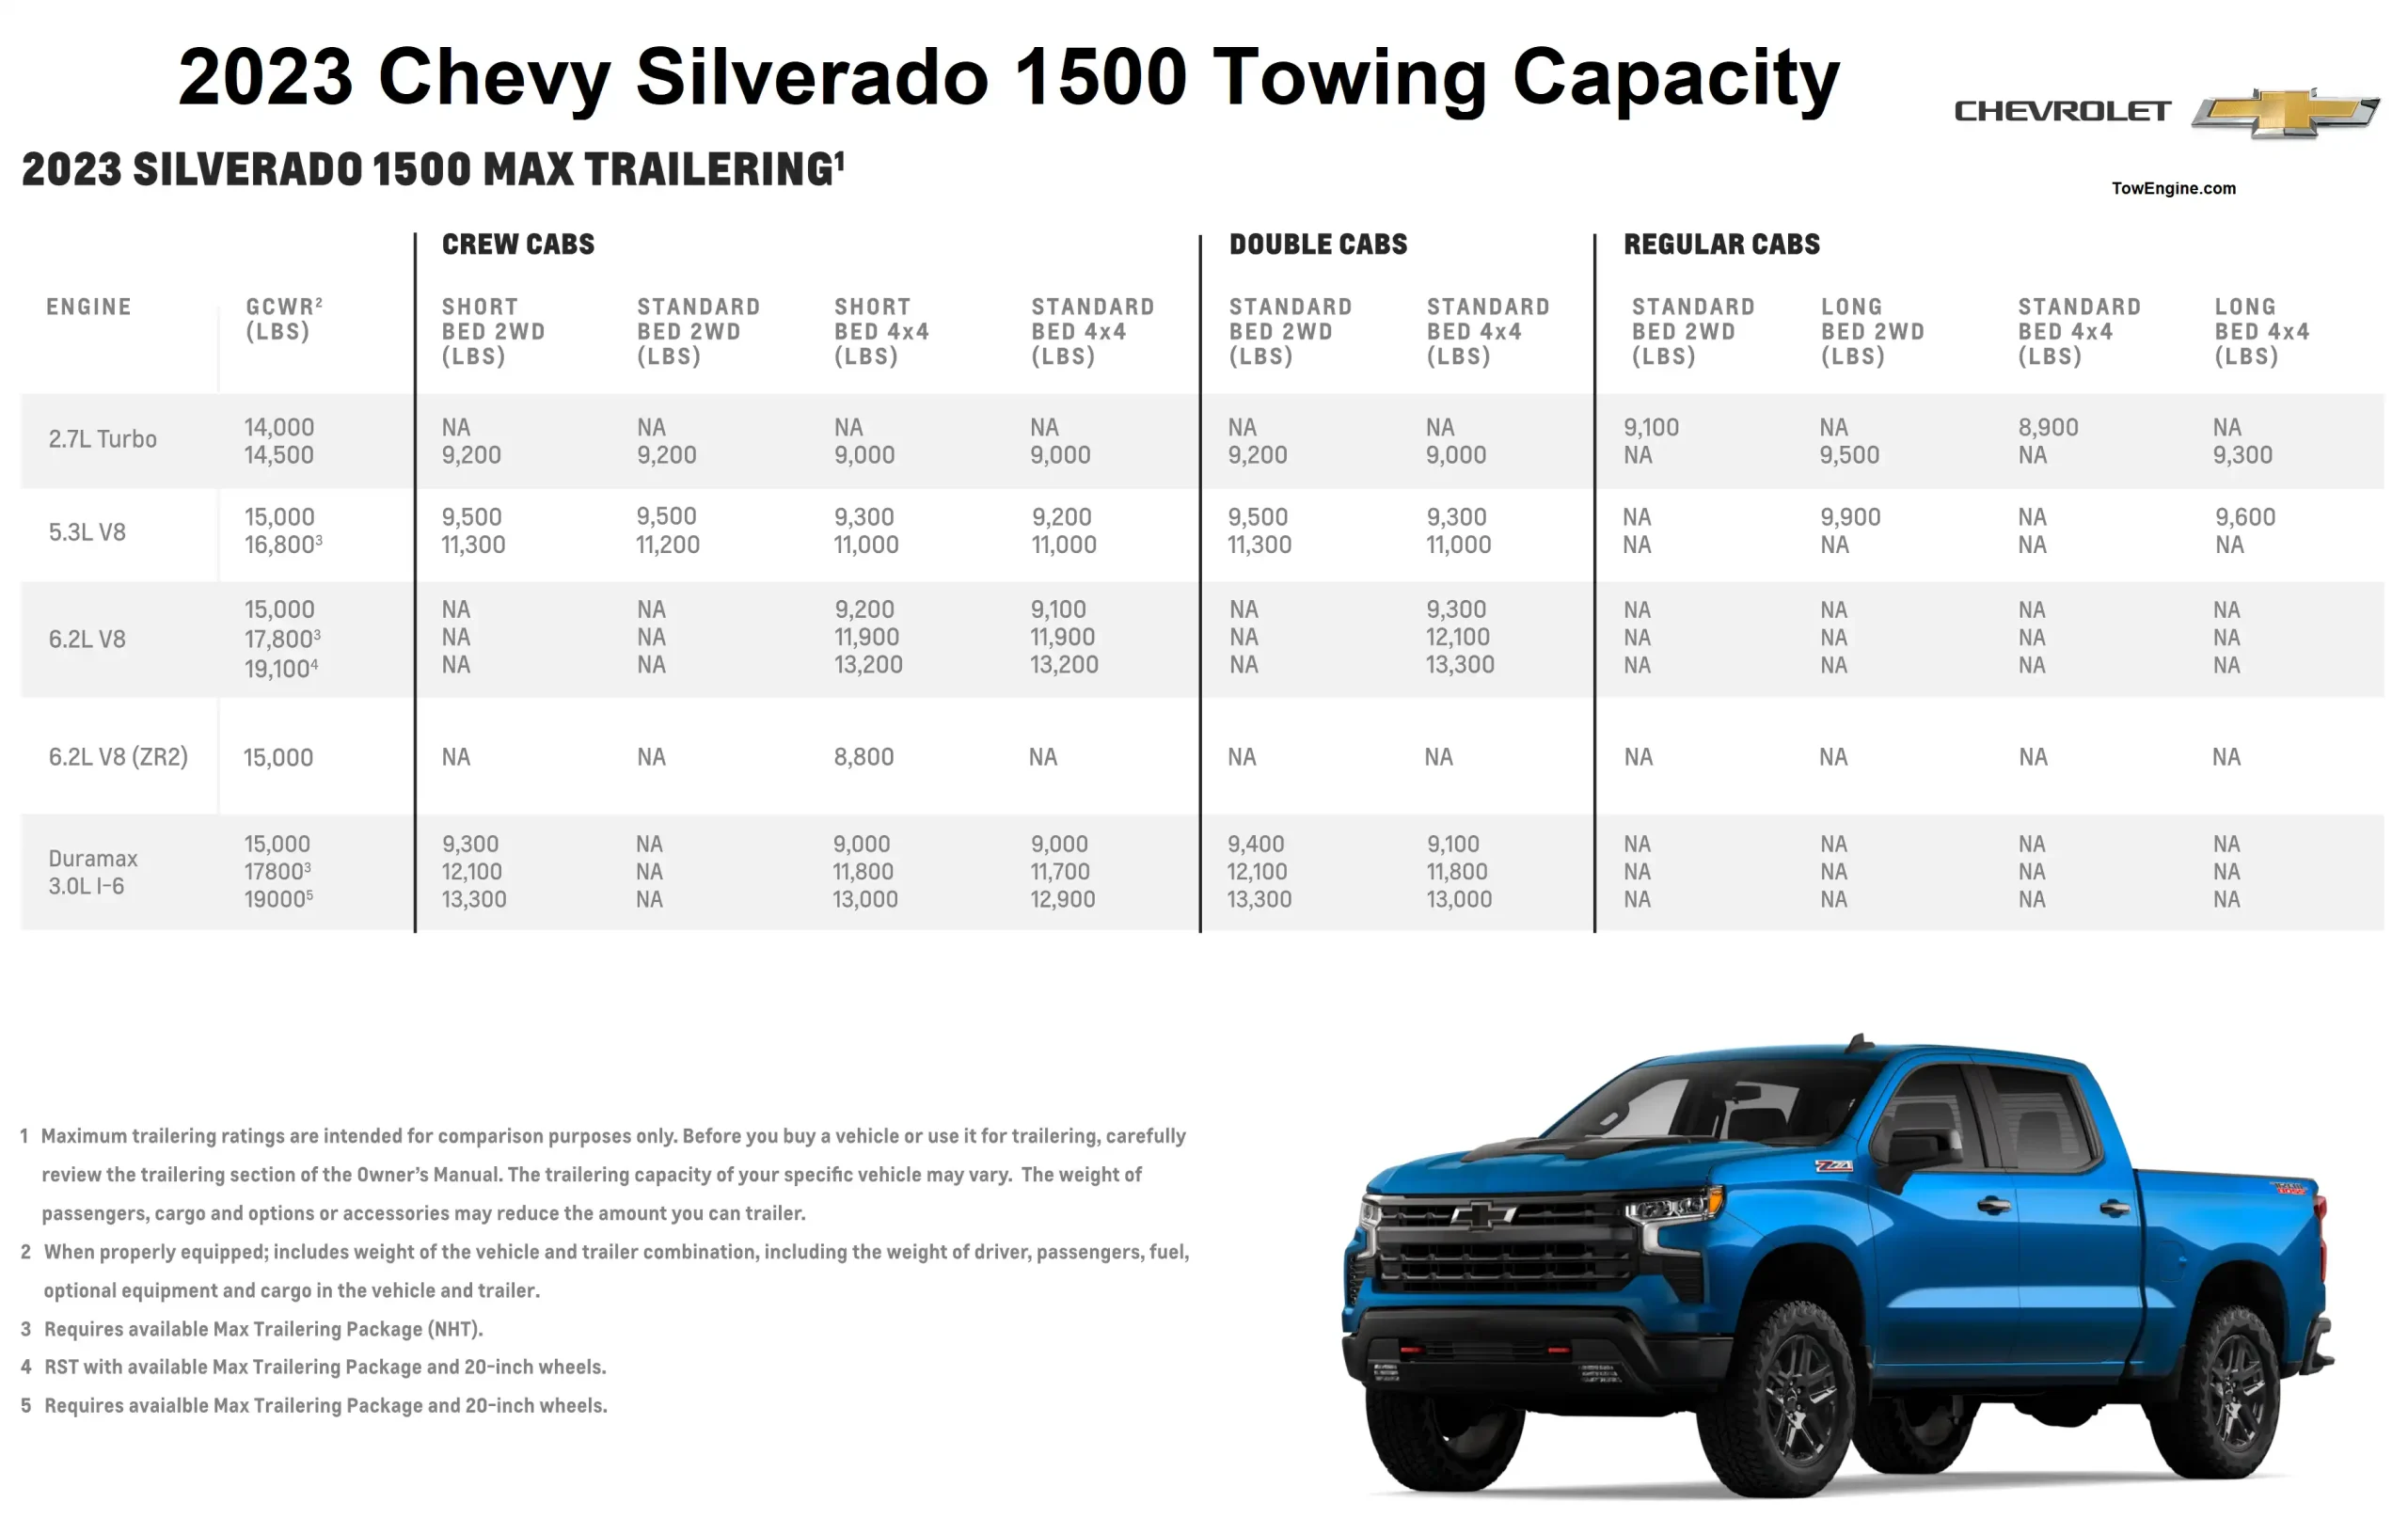 2023 Chevy Chevrolet Silverado 1500 Towing Capacity Chart